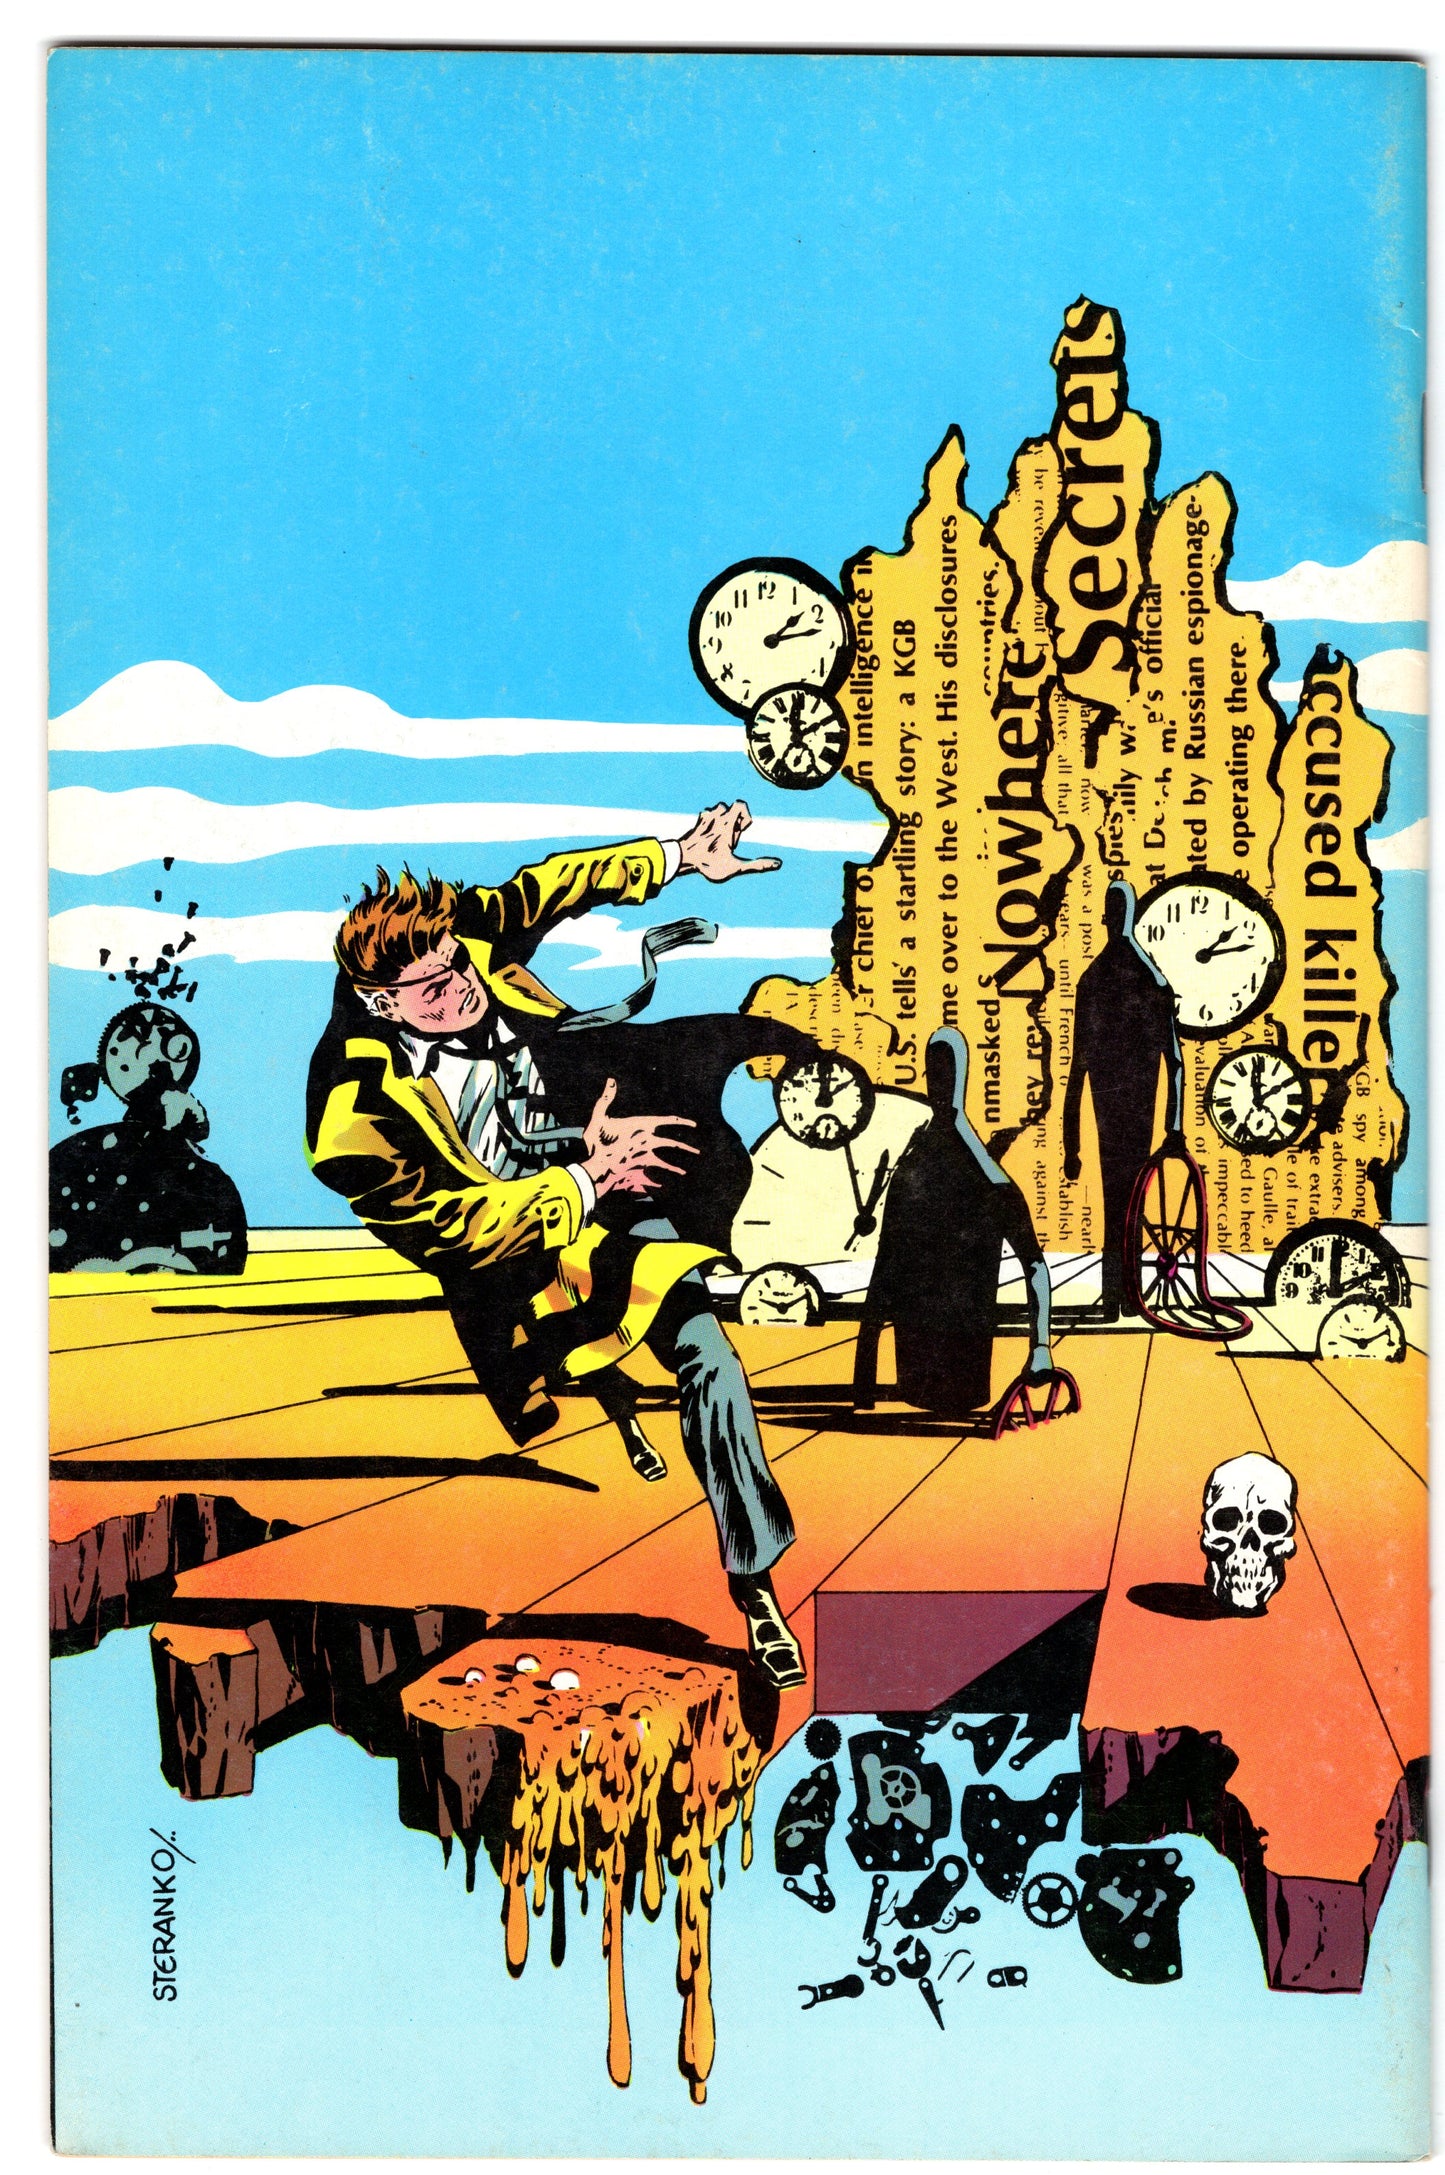 Nick Fury Agent of Shield Issue #2 (Jan. 1984 - Marvel Comics) FN/VF